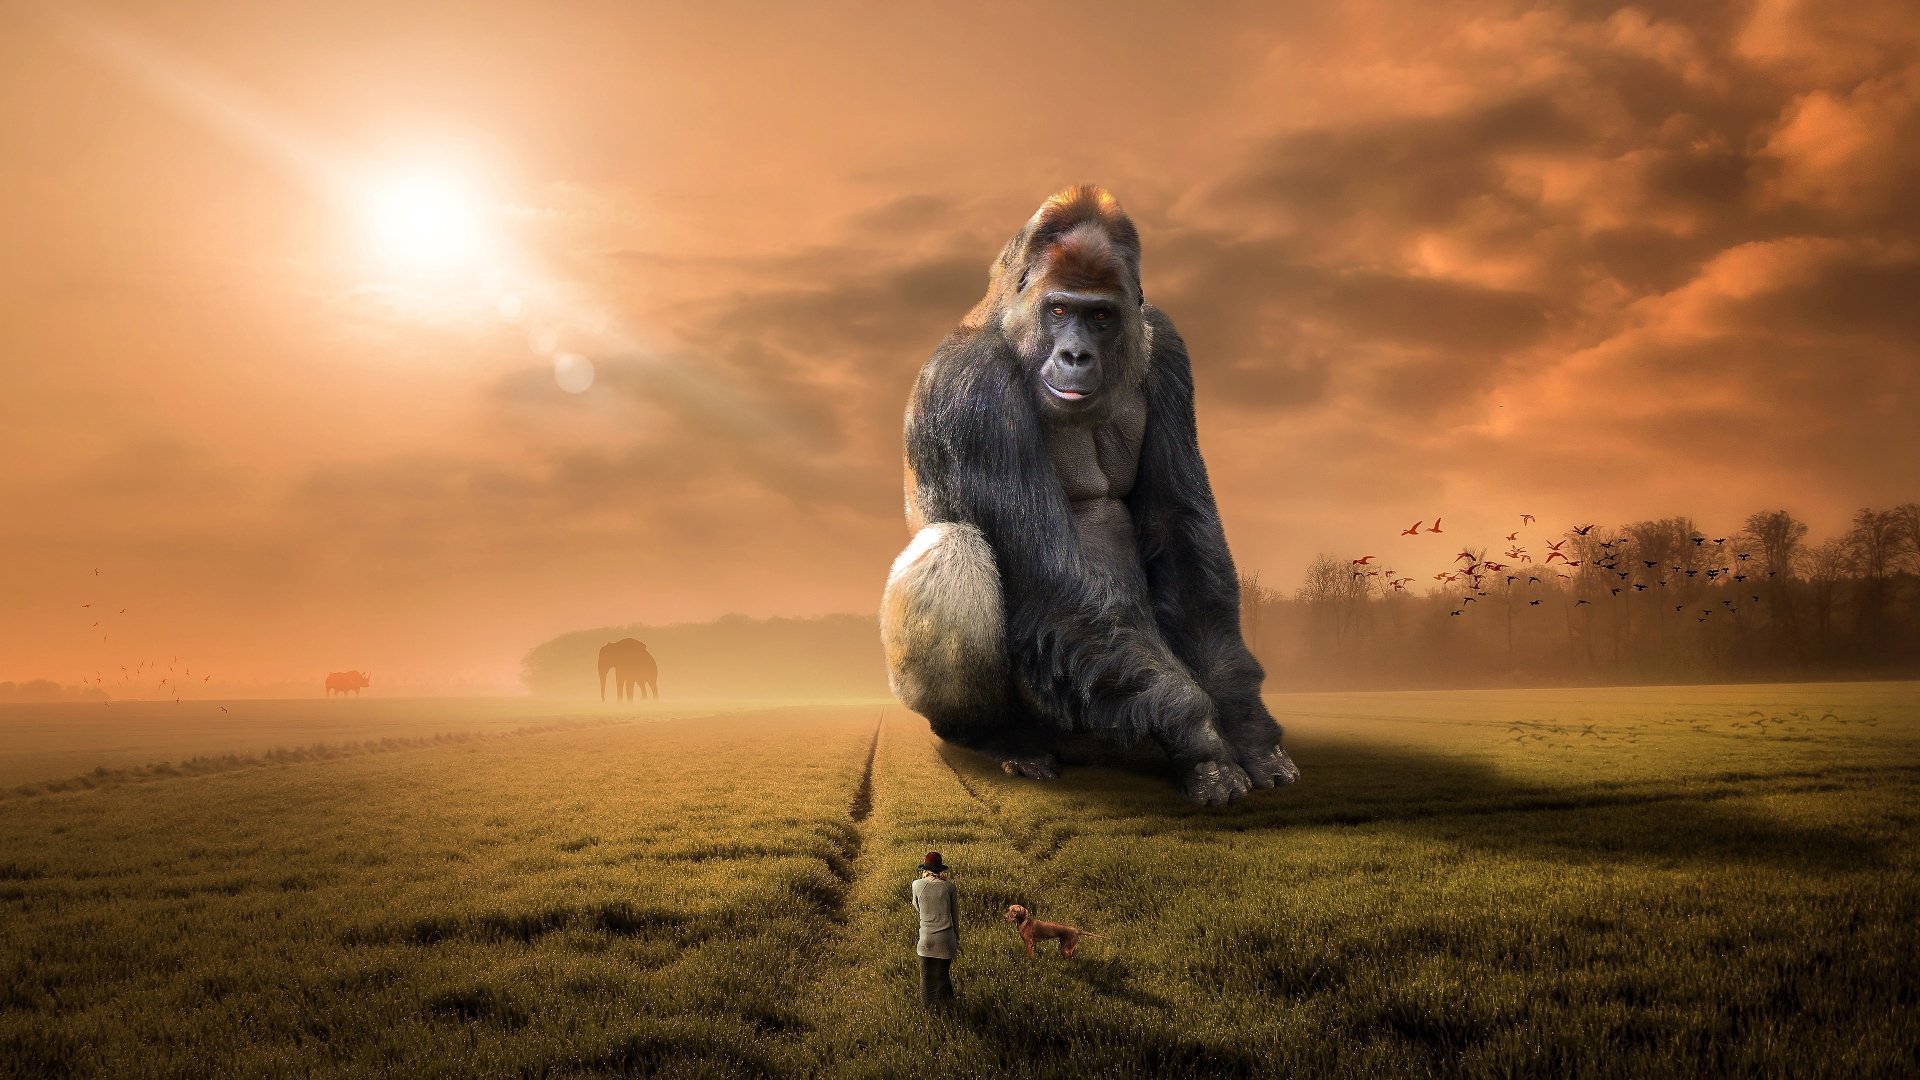 silverback gorilla background